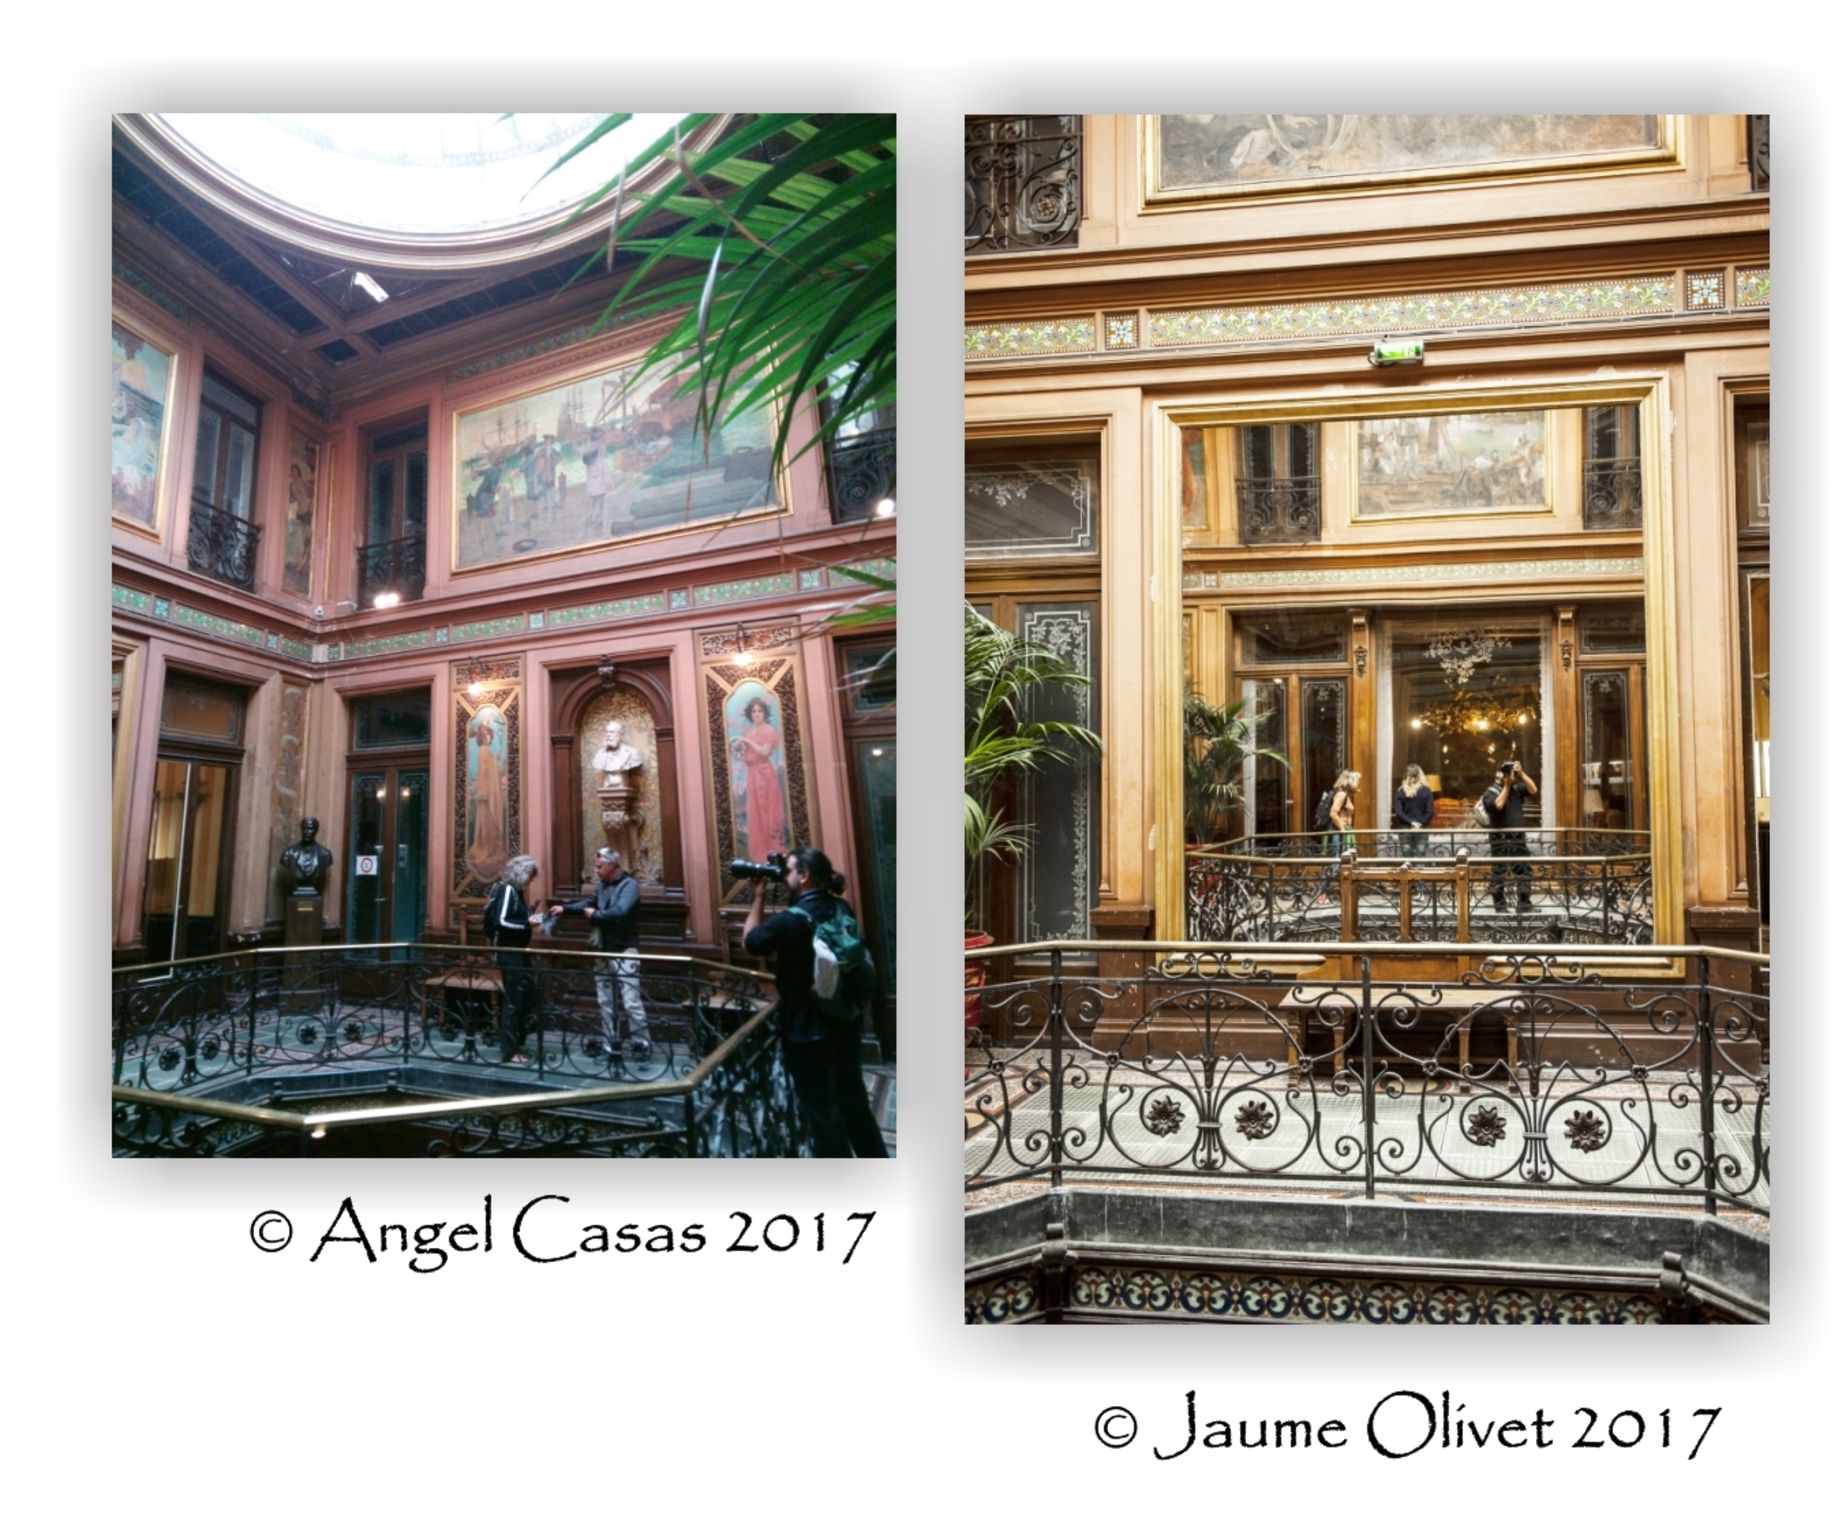  Angel Casas i Jaume Olivet 2017